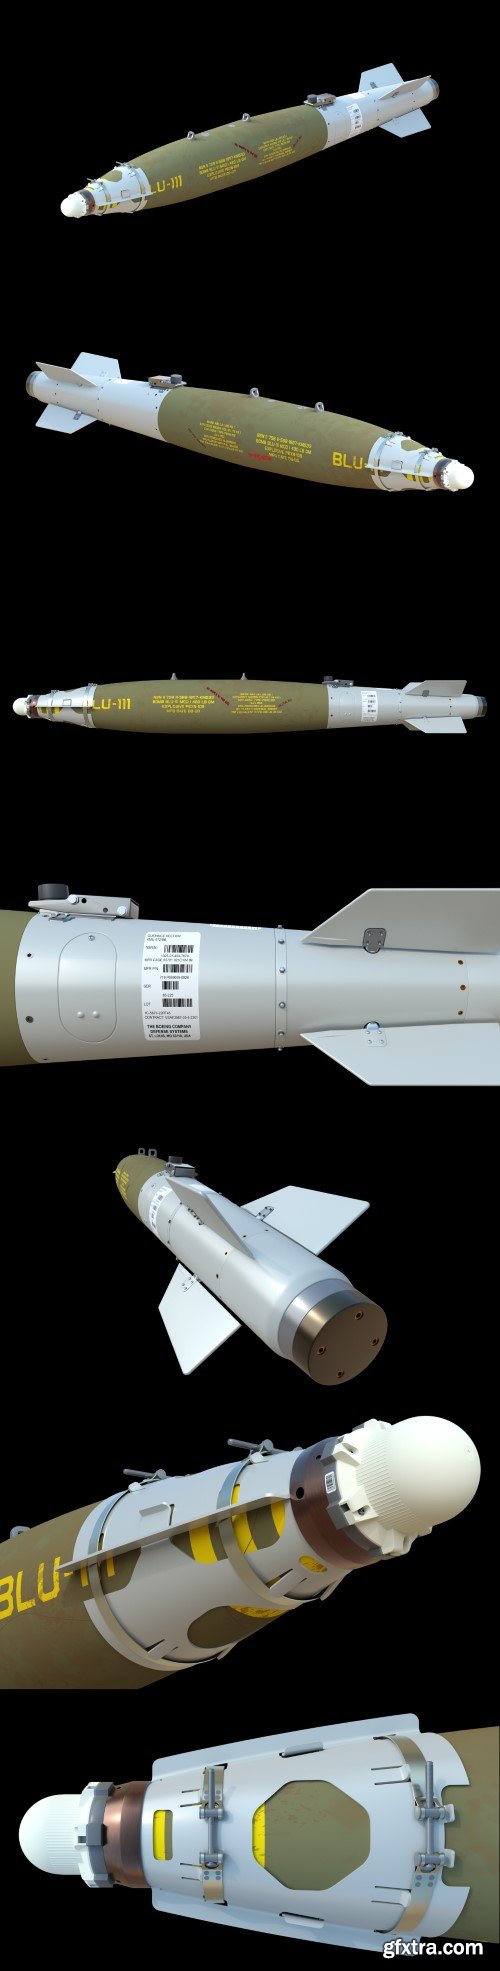 GBU 38 JDAM Bomb 3d model